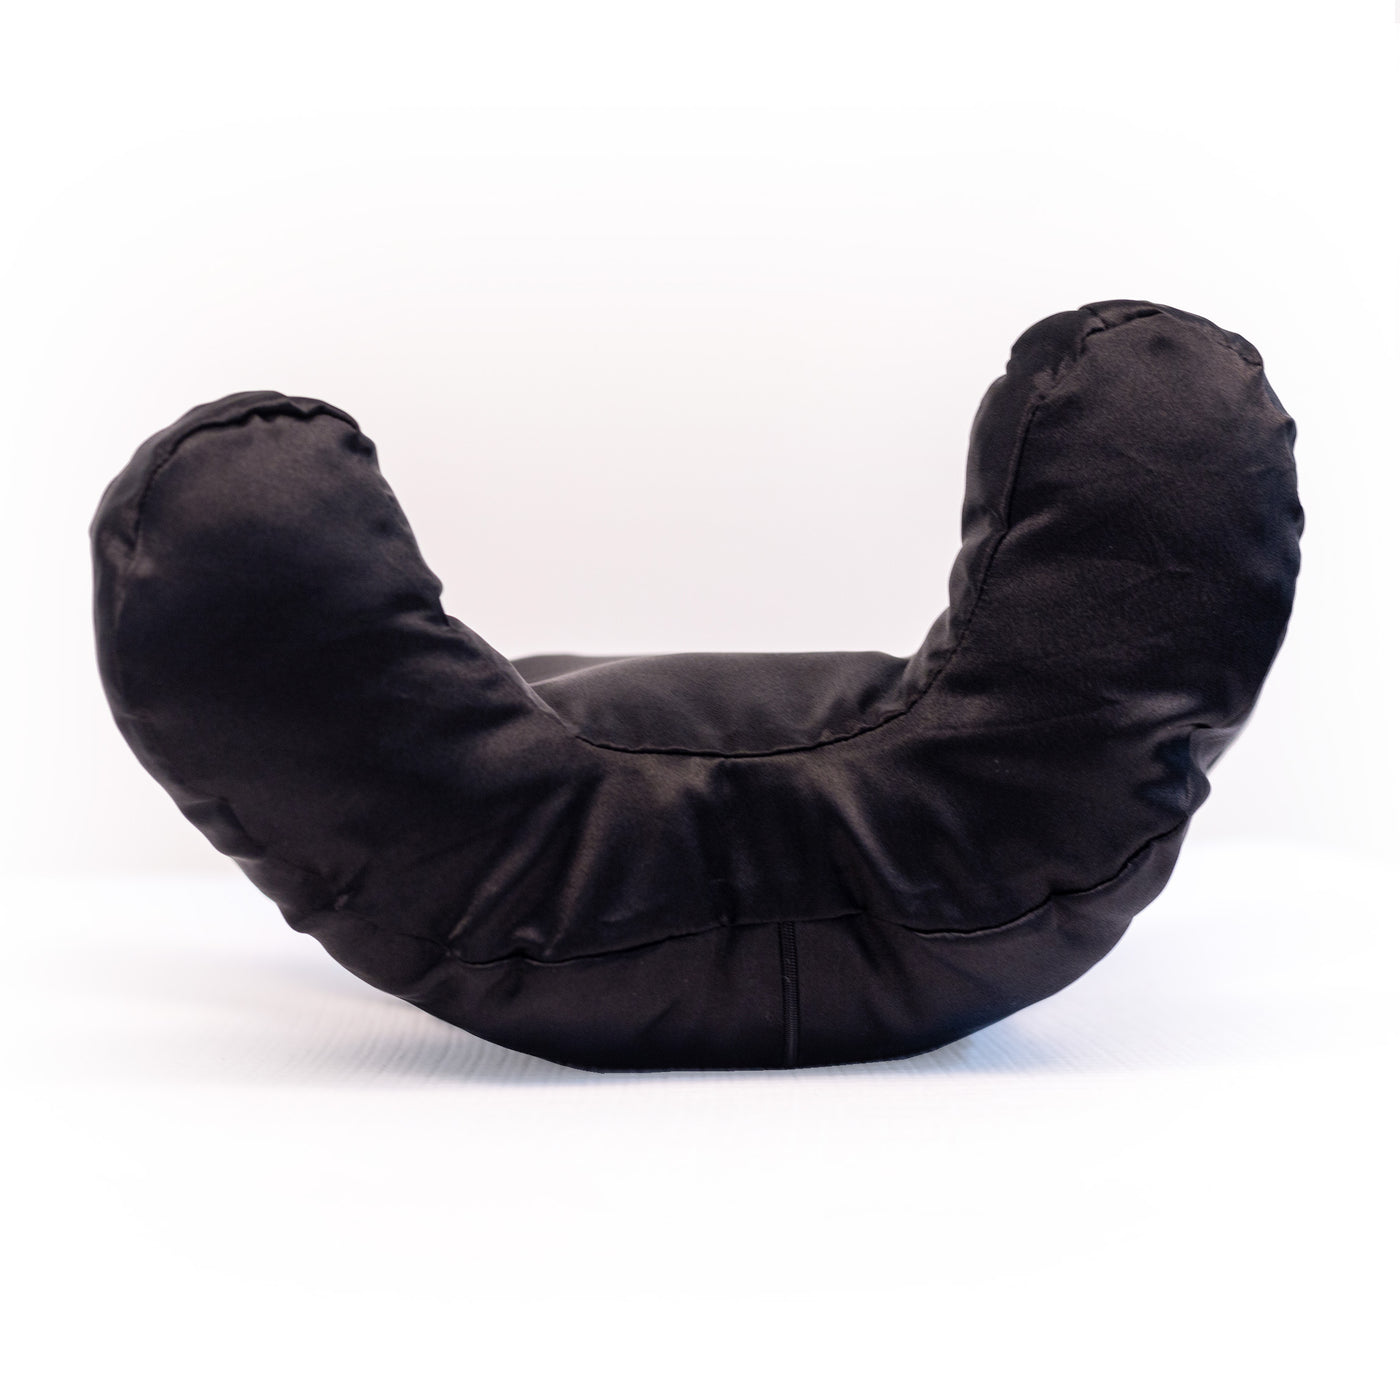 NEW Flawless Face Pillow Cloud + FREE Black Satin Pillowcase